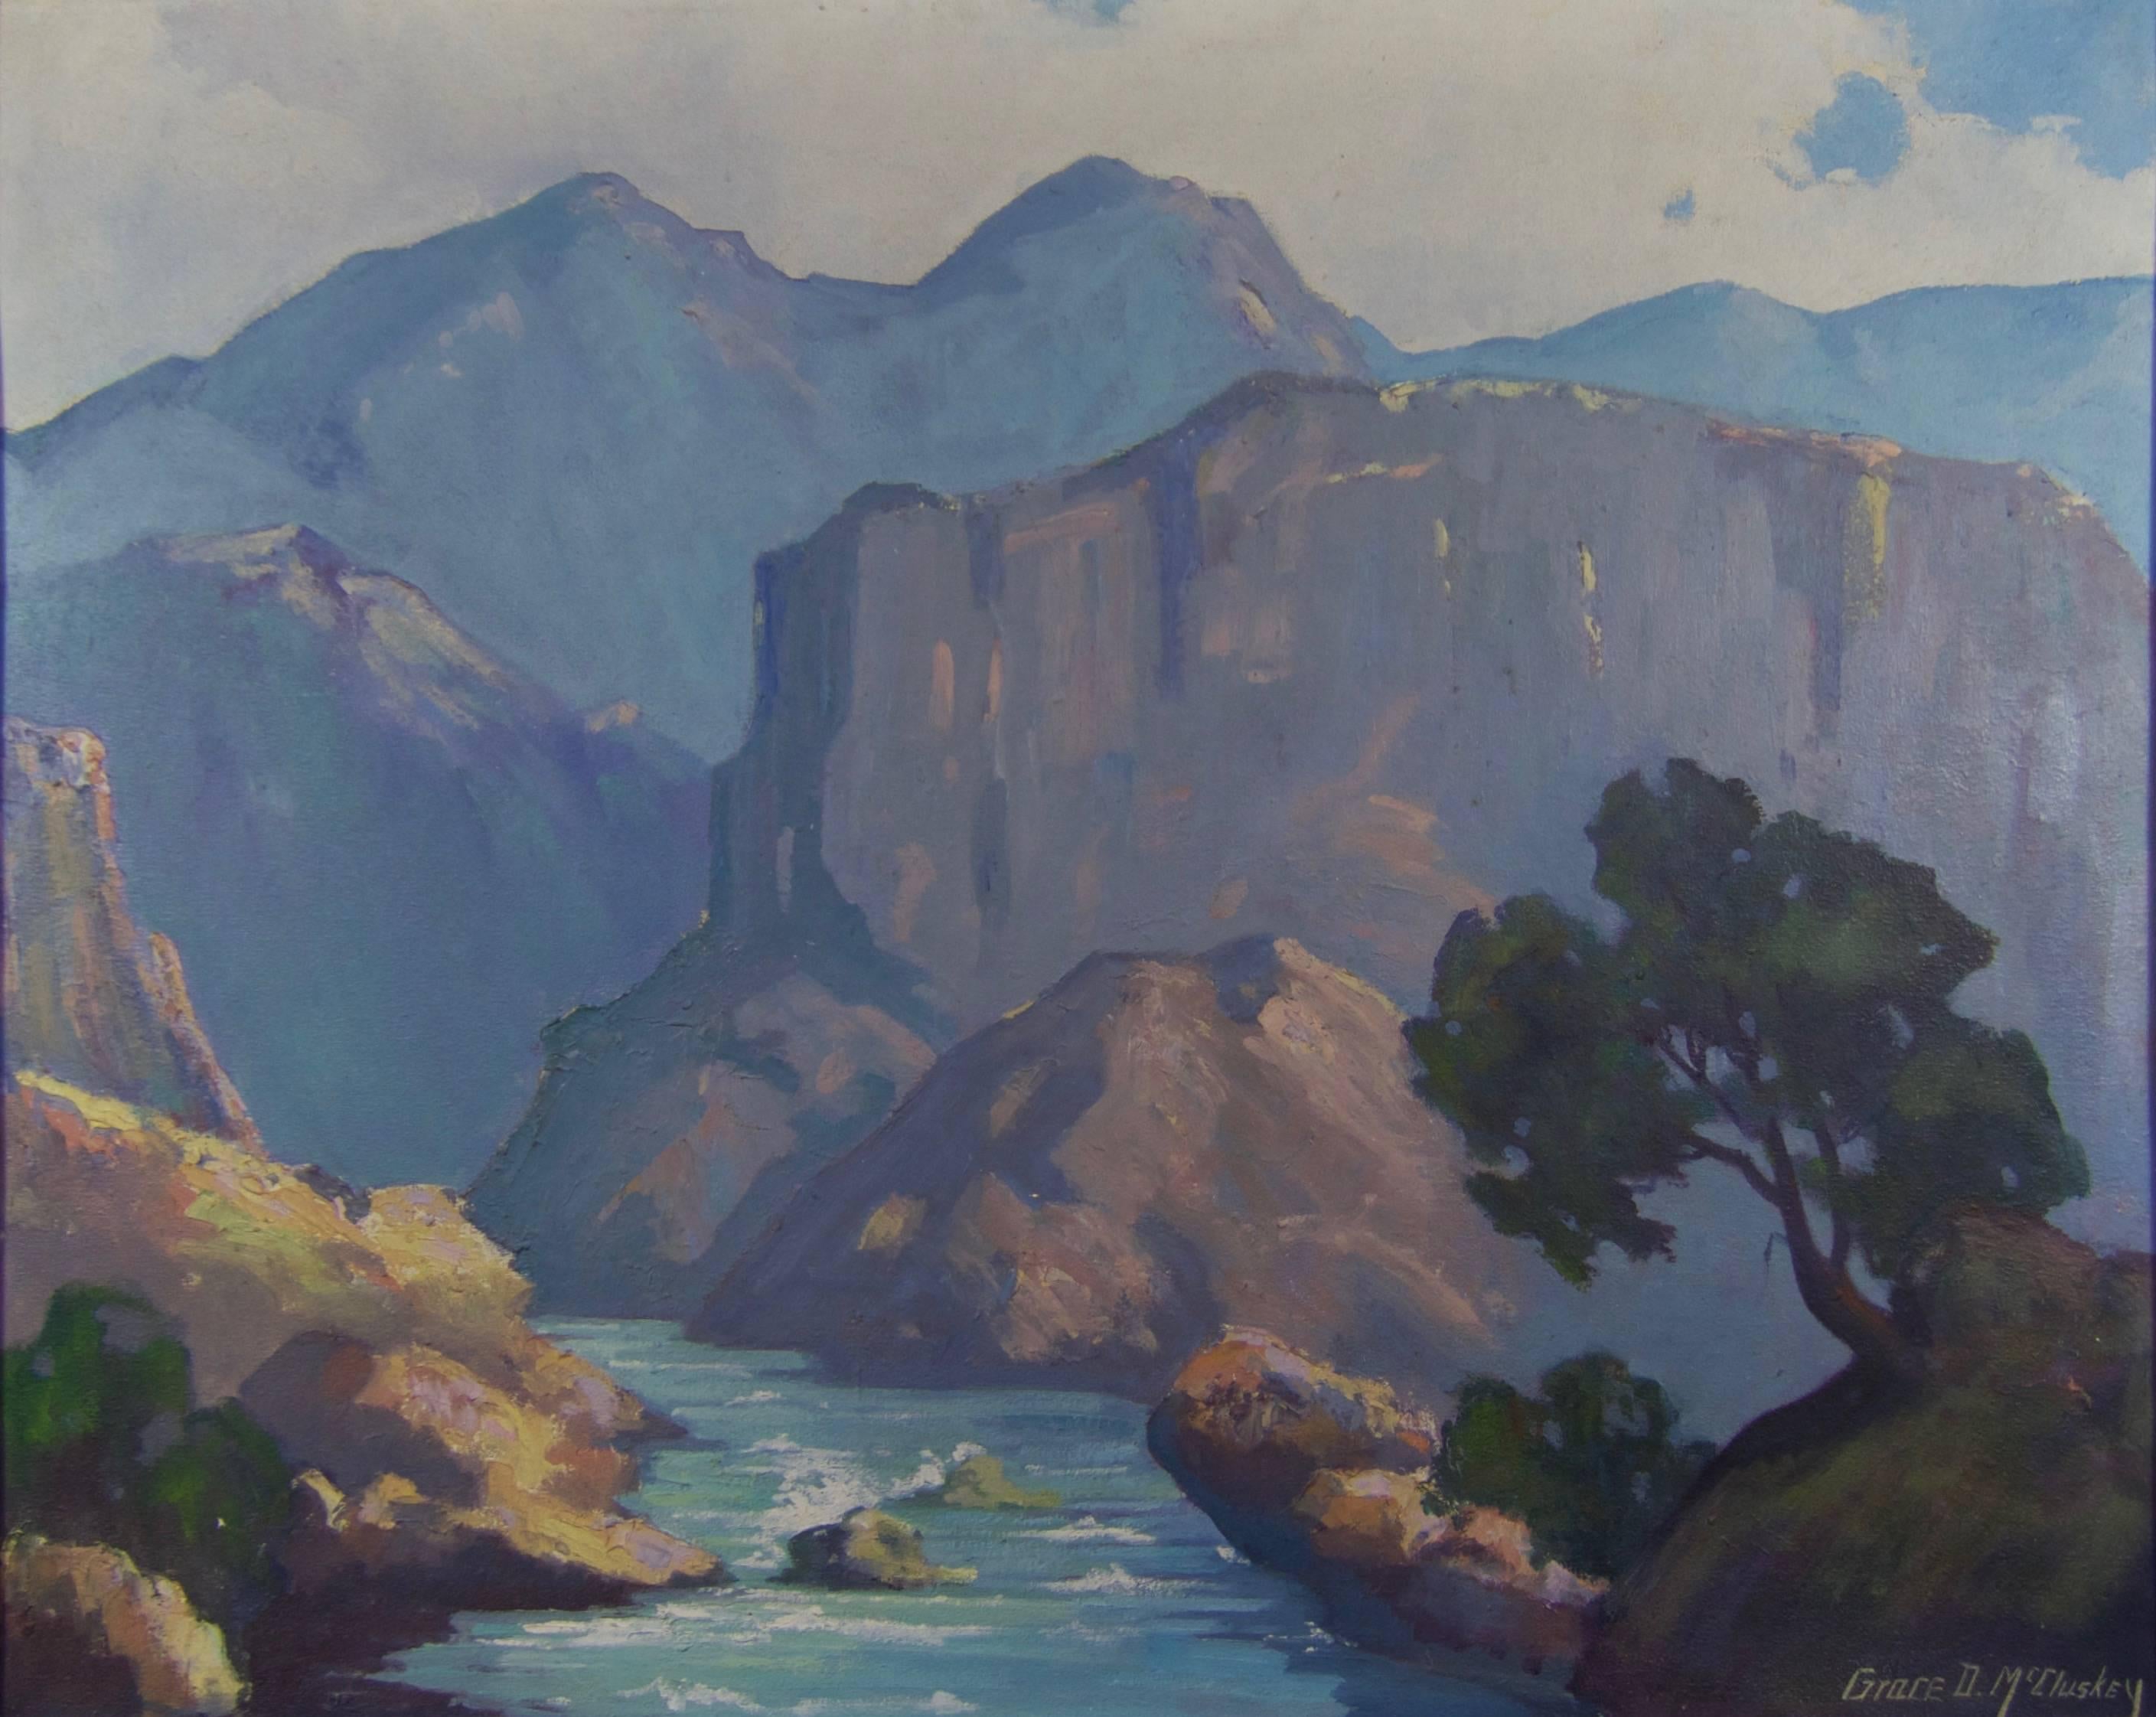 Unknown Landscape Painting - California landscape painting